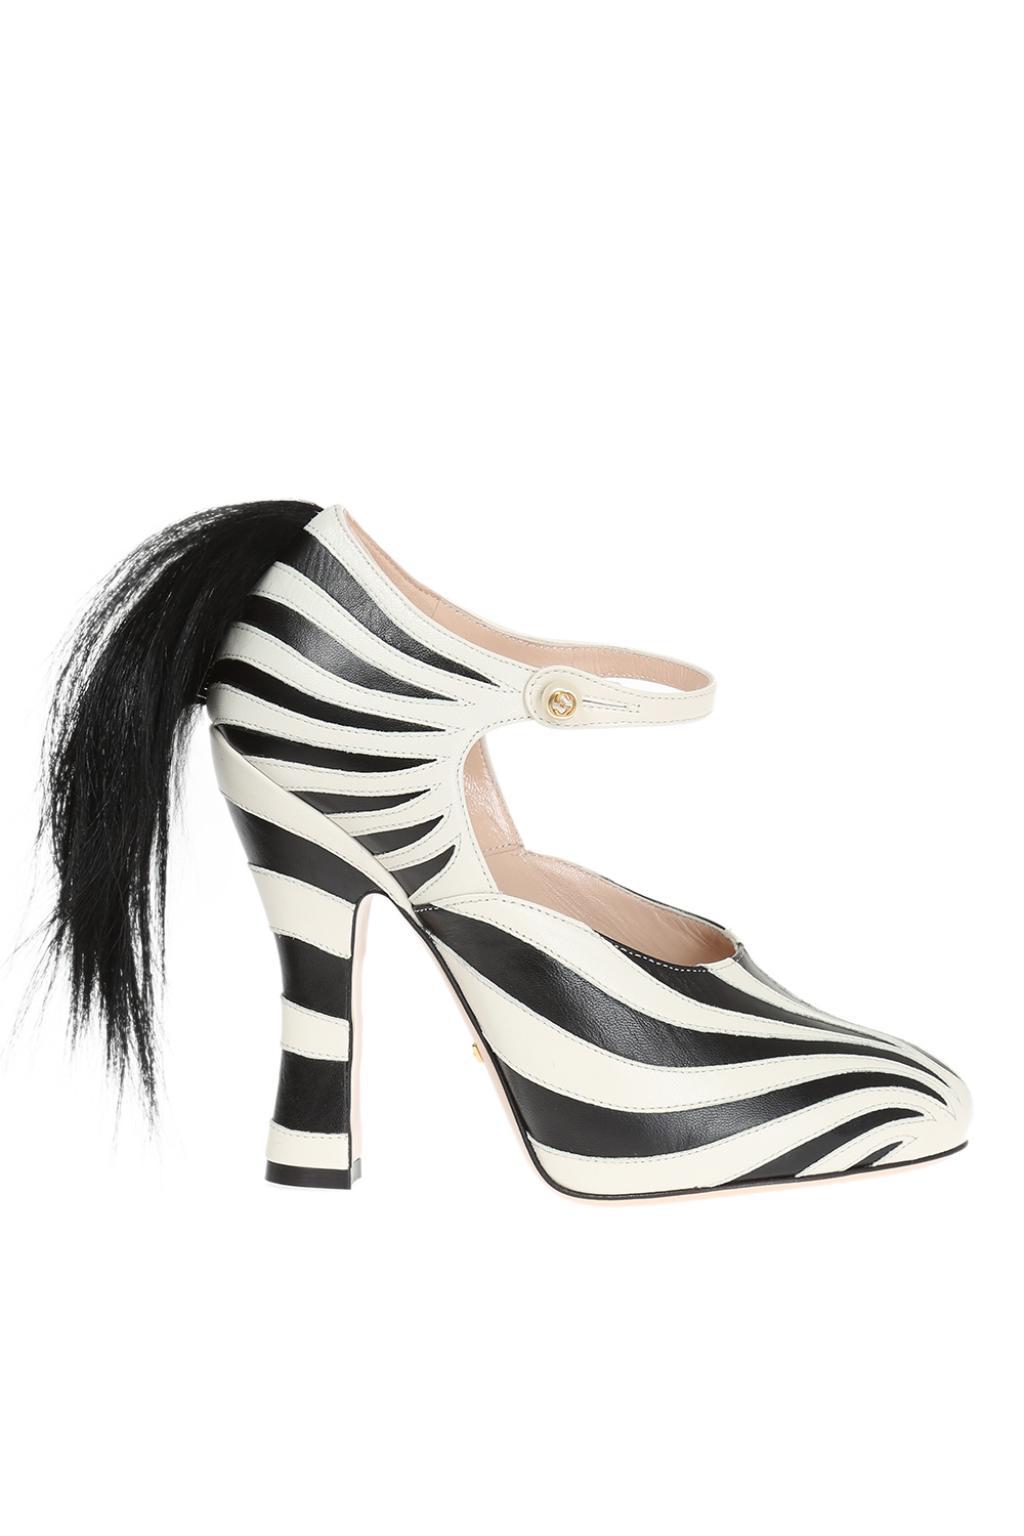 zebra gucci shoes